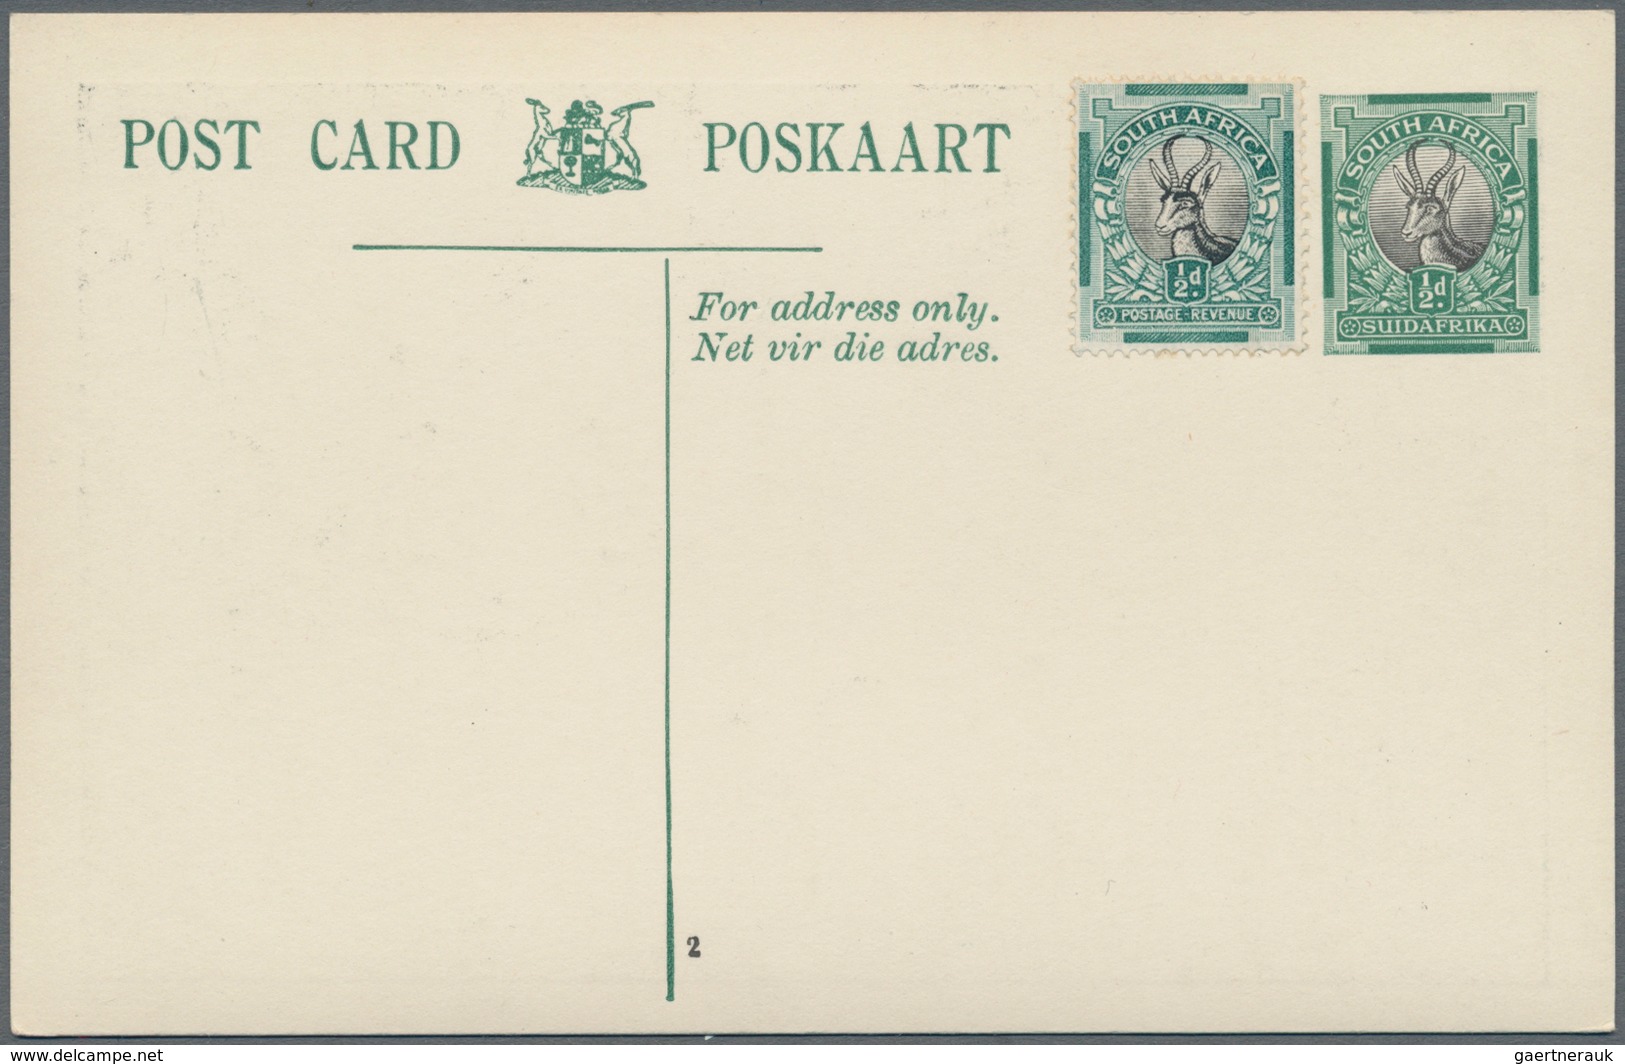 Südafrika - Ganzsachen: 1934, pictorial stat. postcards Springbok ½d. green/black with outlined box